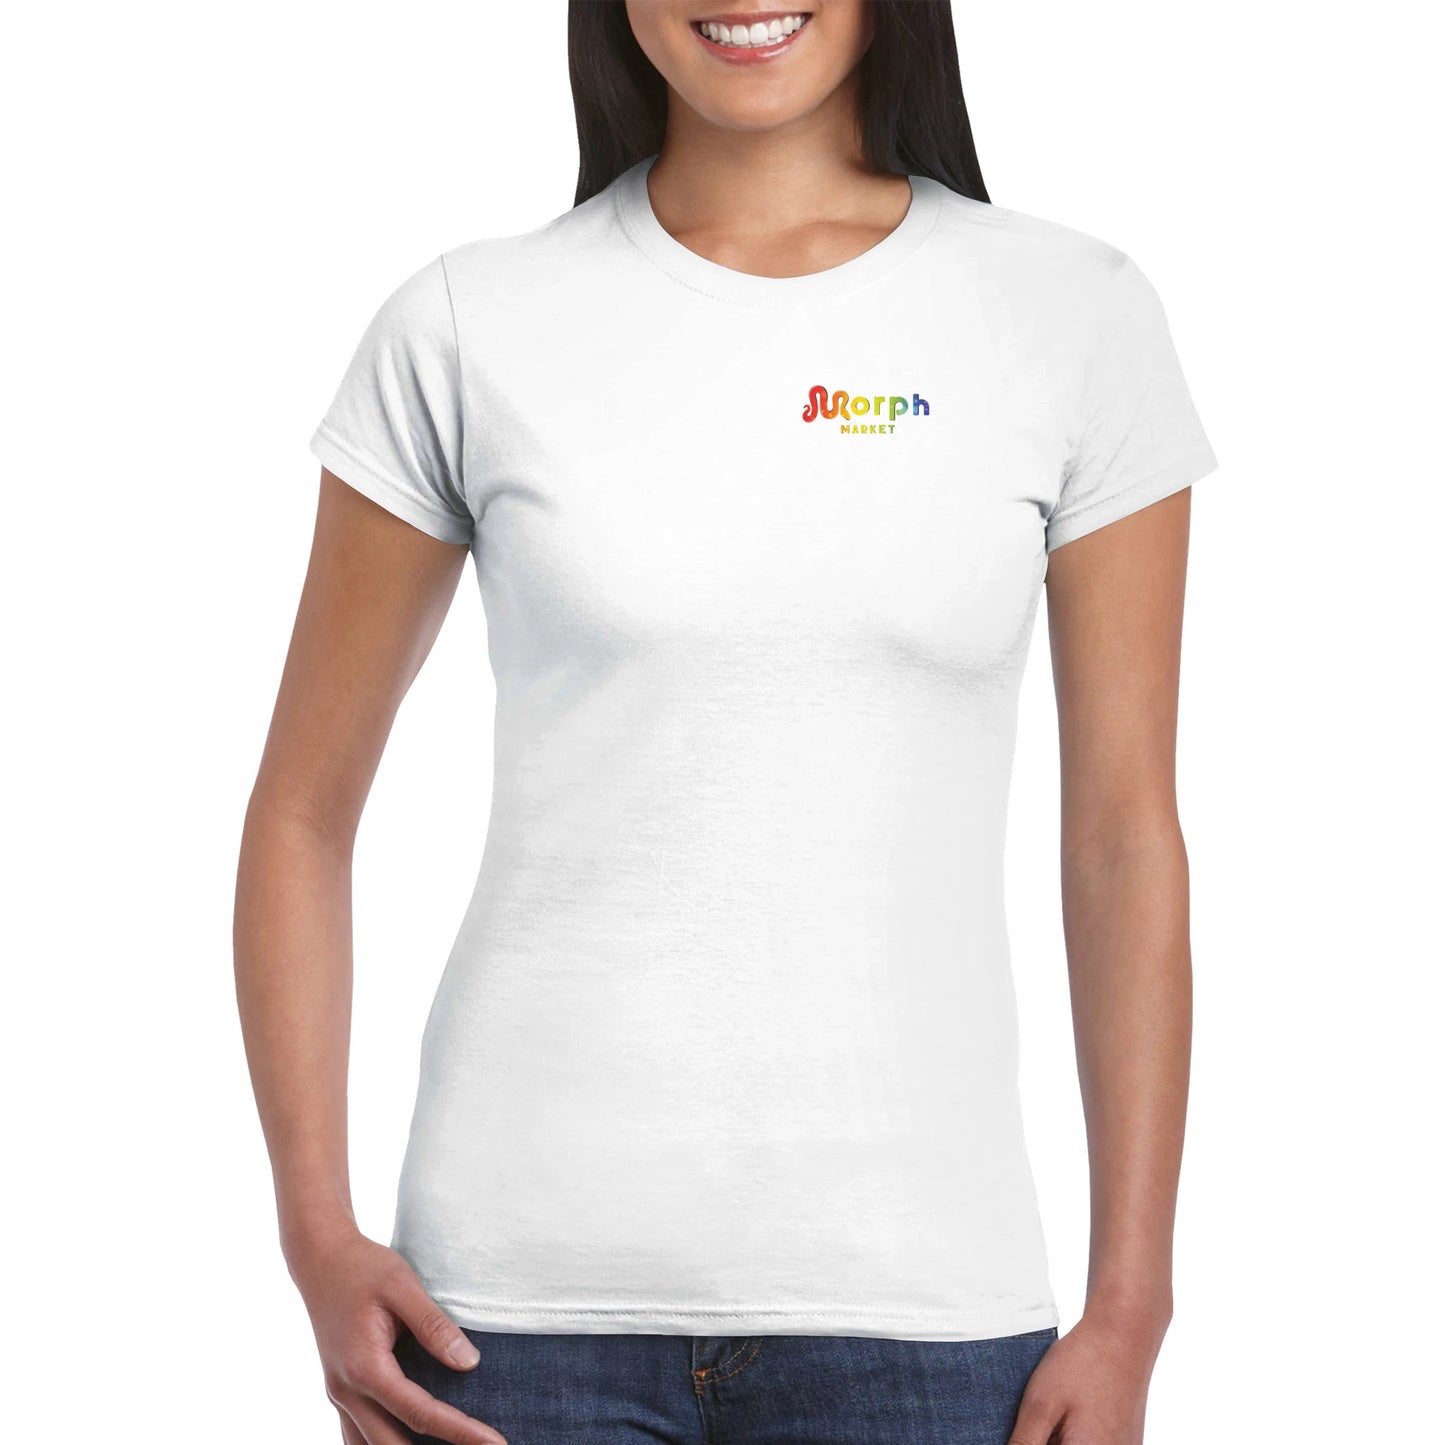 Morph Market (Rainbow Circles) - Classic Womens Crewneck T-shirt